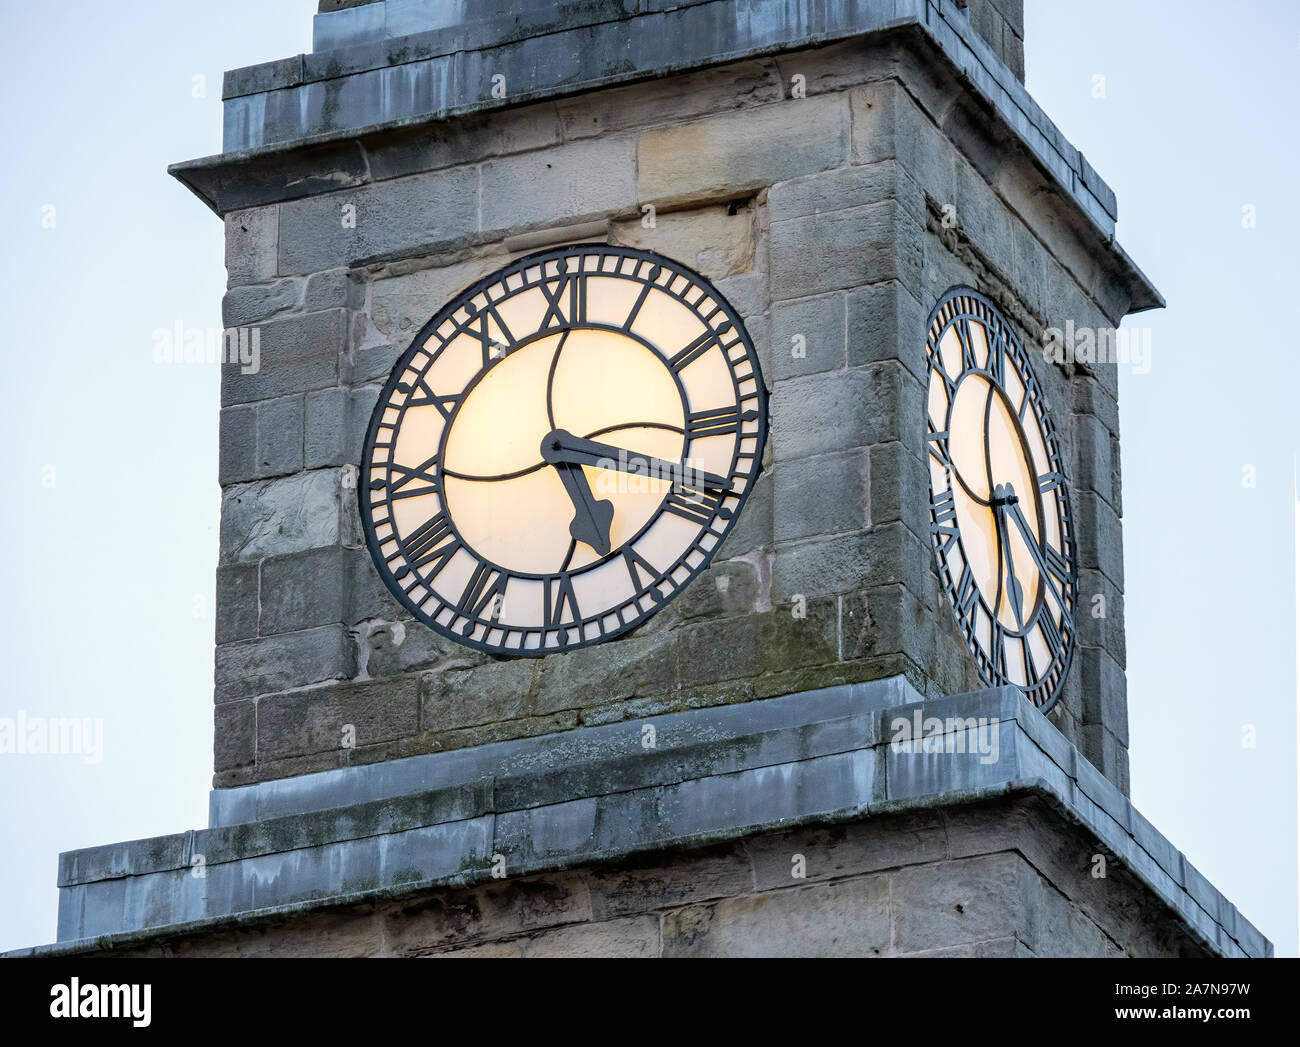 Town Clock showing nineteen minutes past five, Langholm, Scotland, UK. Stock Photo